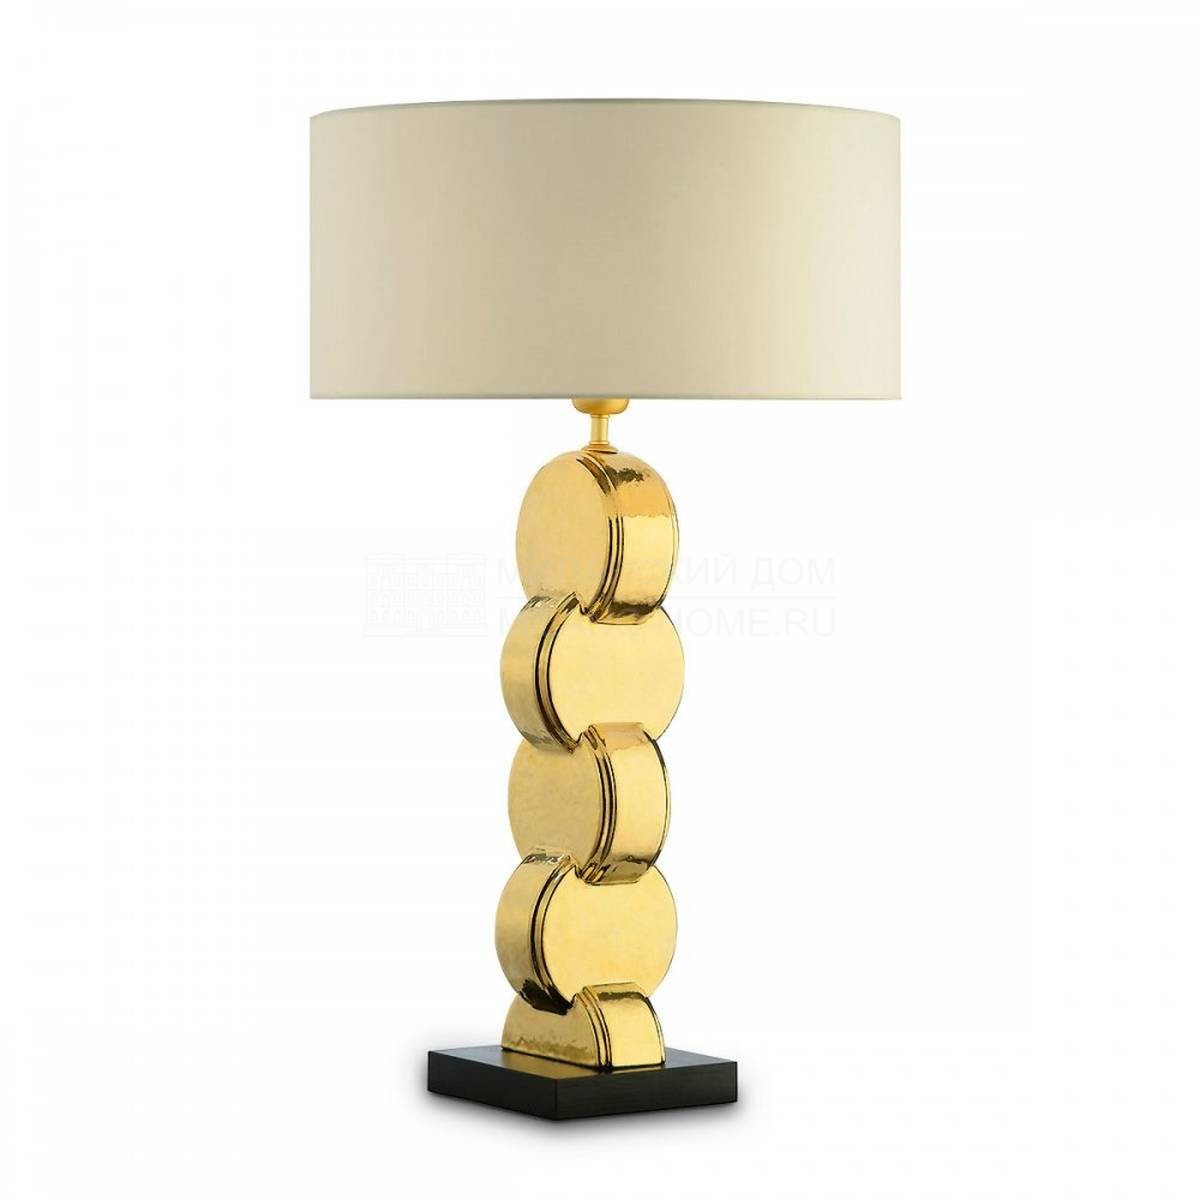 Настольная лампа Chain table lamp из Италии фабрики MARIONI